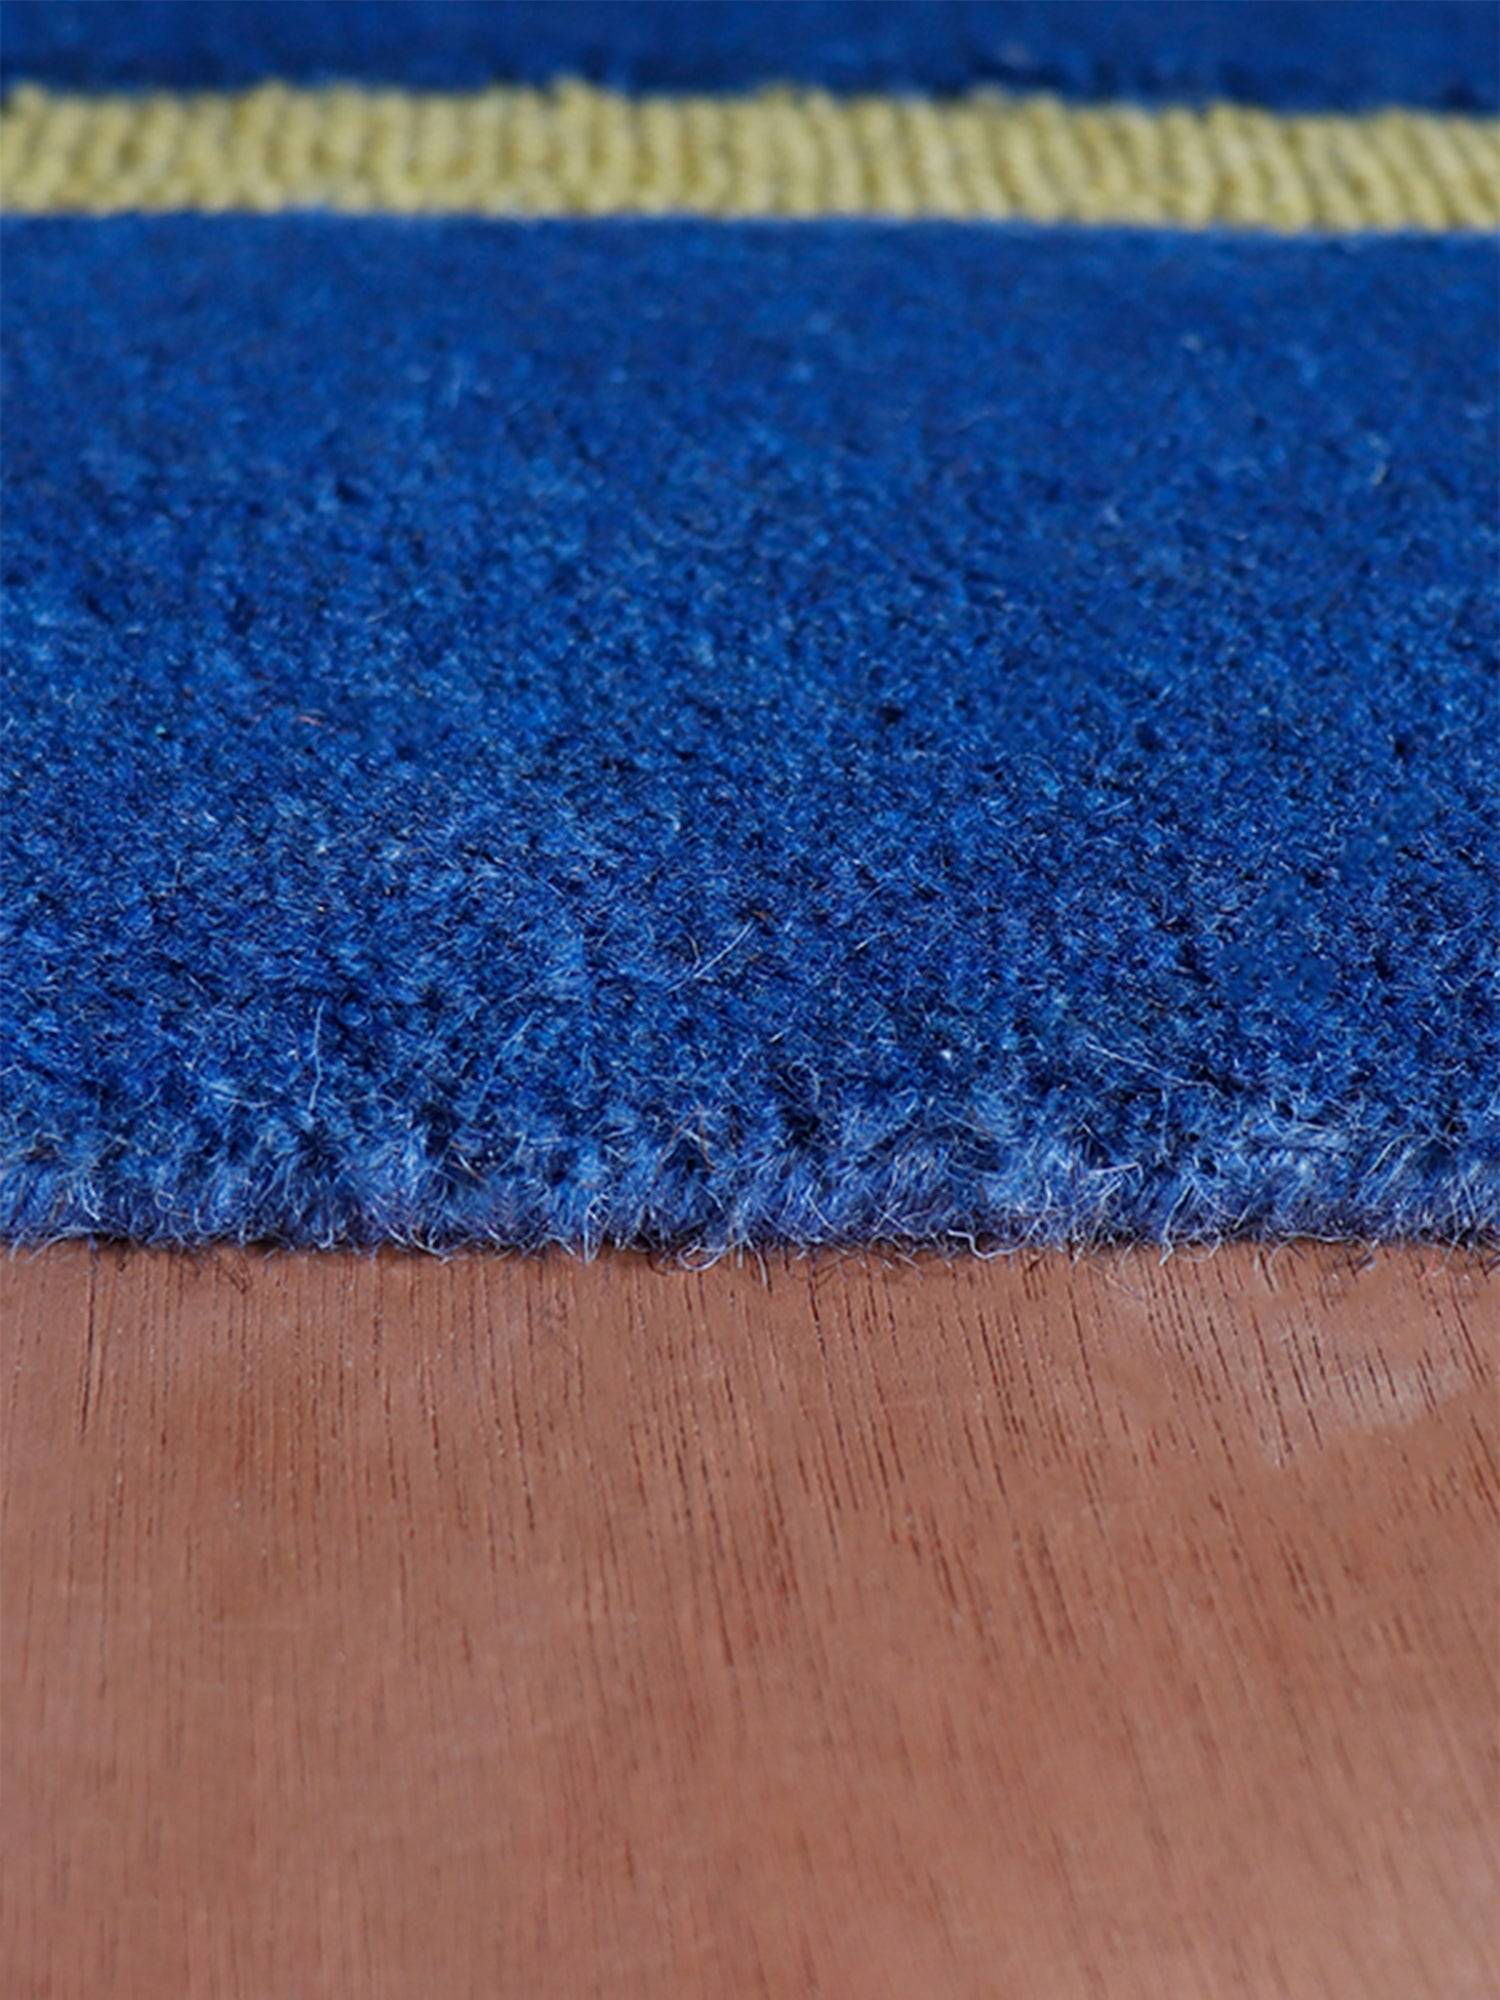 Carpet Hand Tufted 100% Woollen Blues Green Yellow Striped - 4ft X 6ft